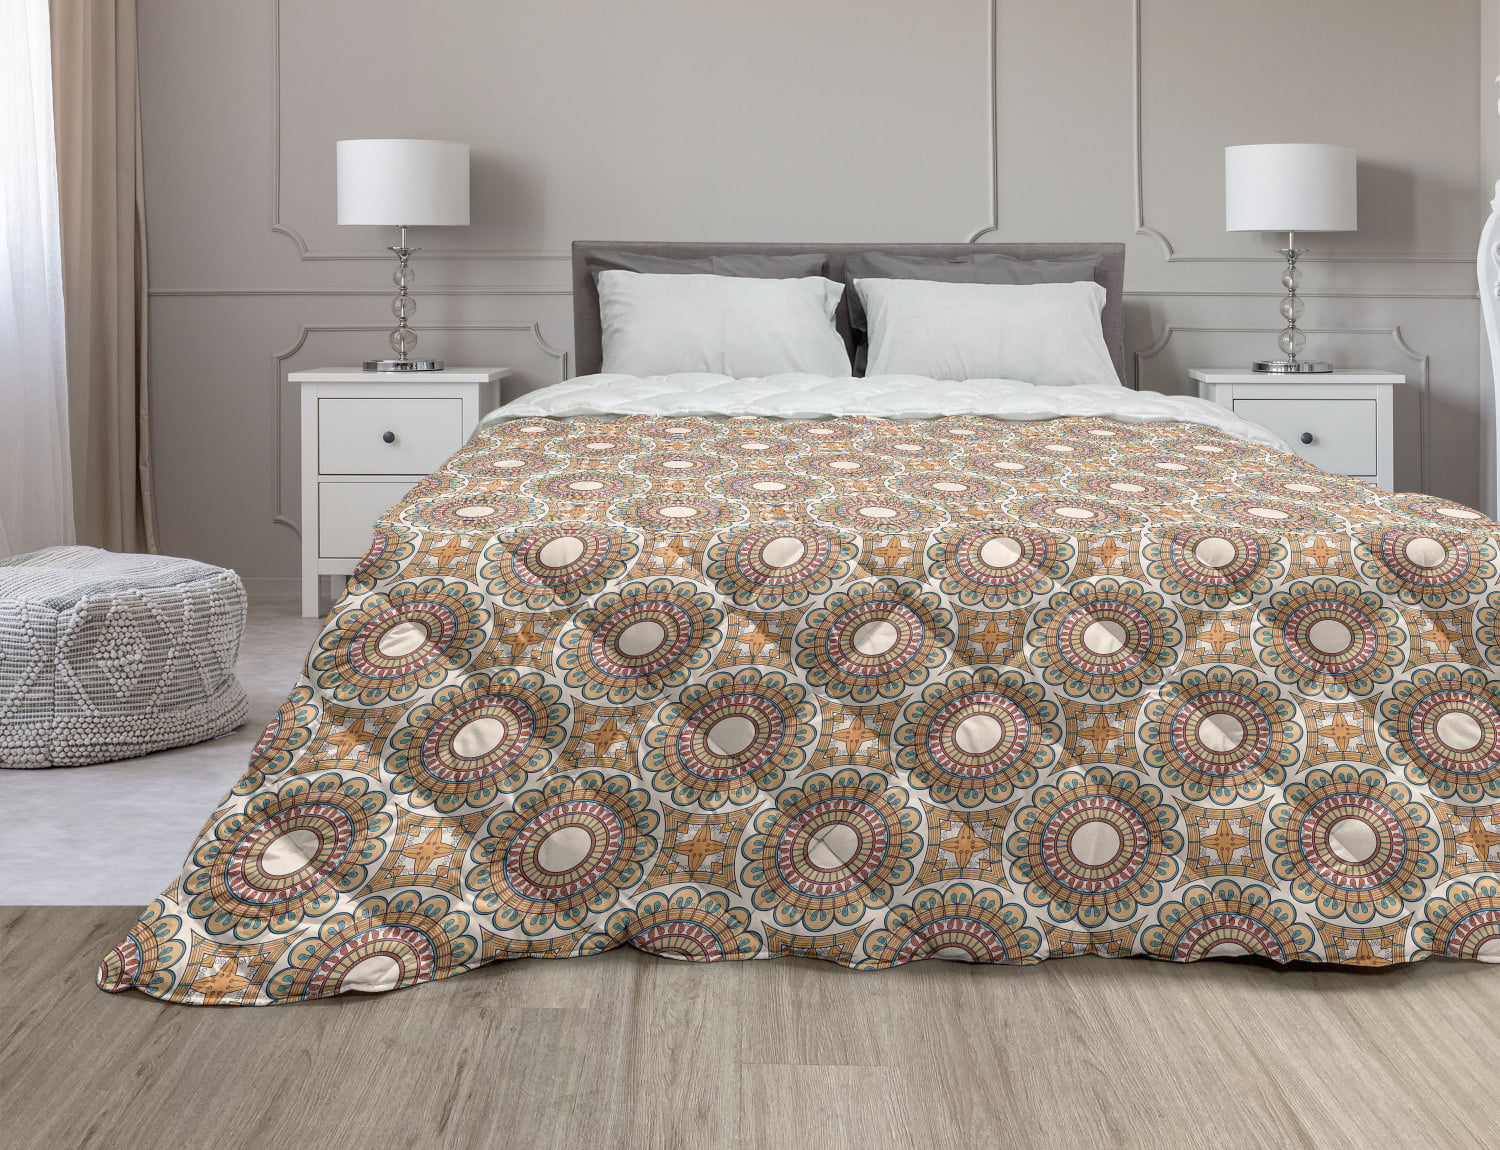 Details about   Ethnic Henna Pillow Sham Decorative Pillowcase 3 Sizes Bedroom Decor Ambesonne 